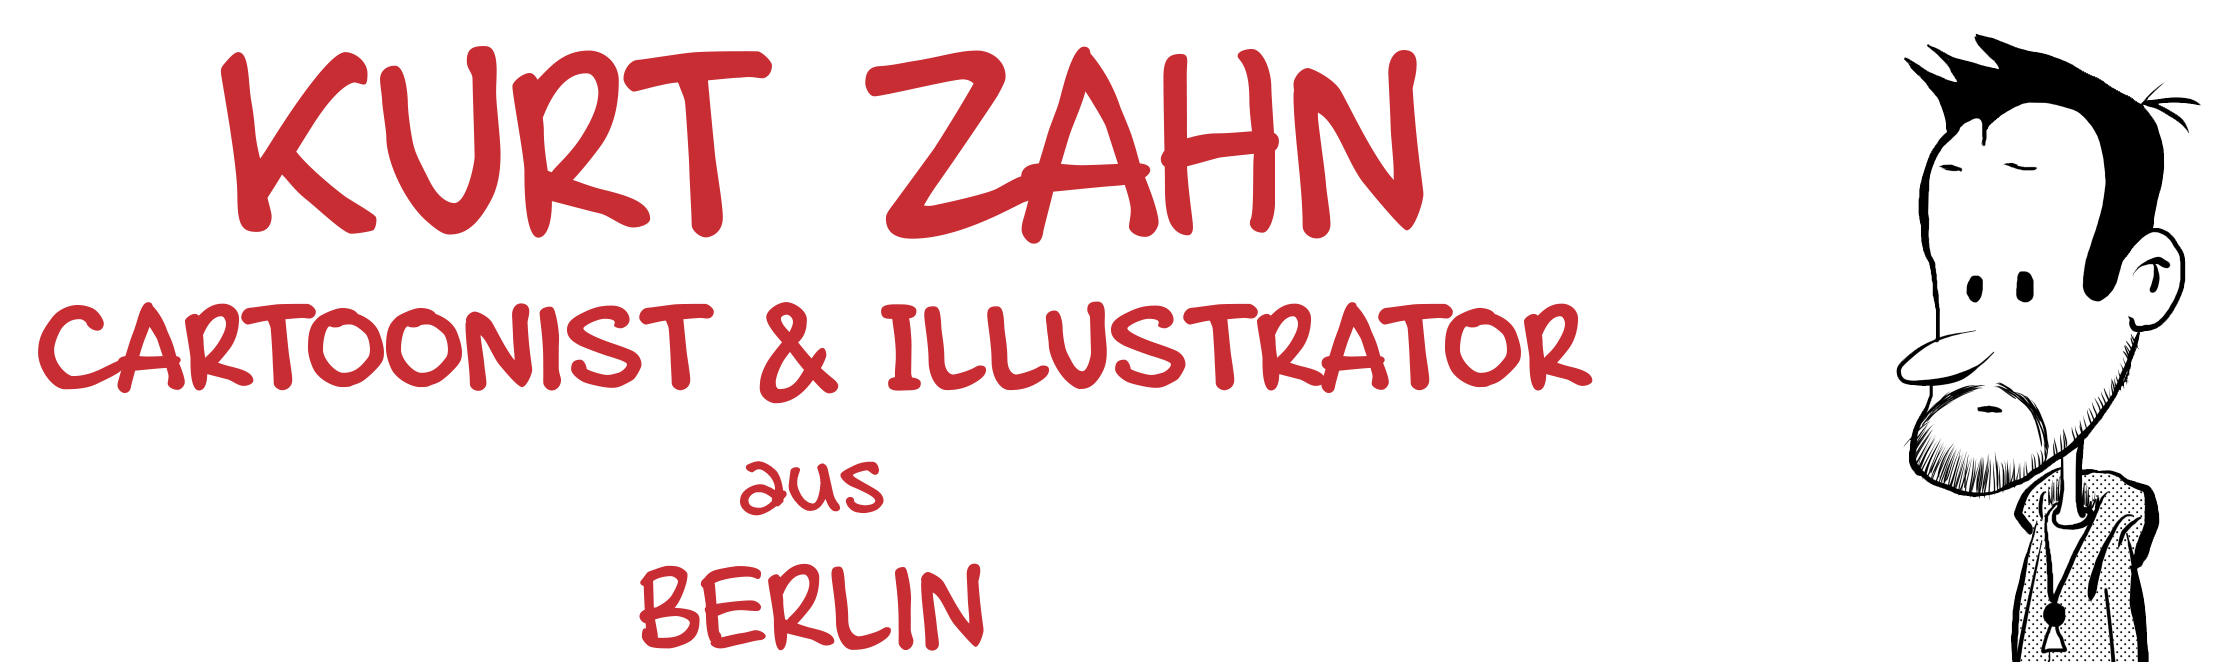 Kurt Zahn - Cartoonist and Illustrator aus Berlin